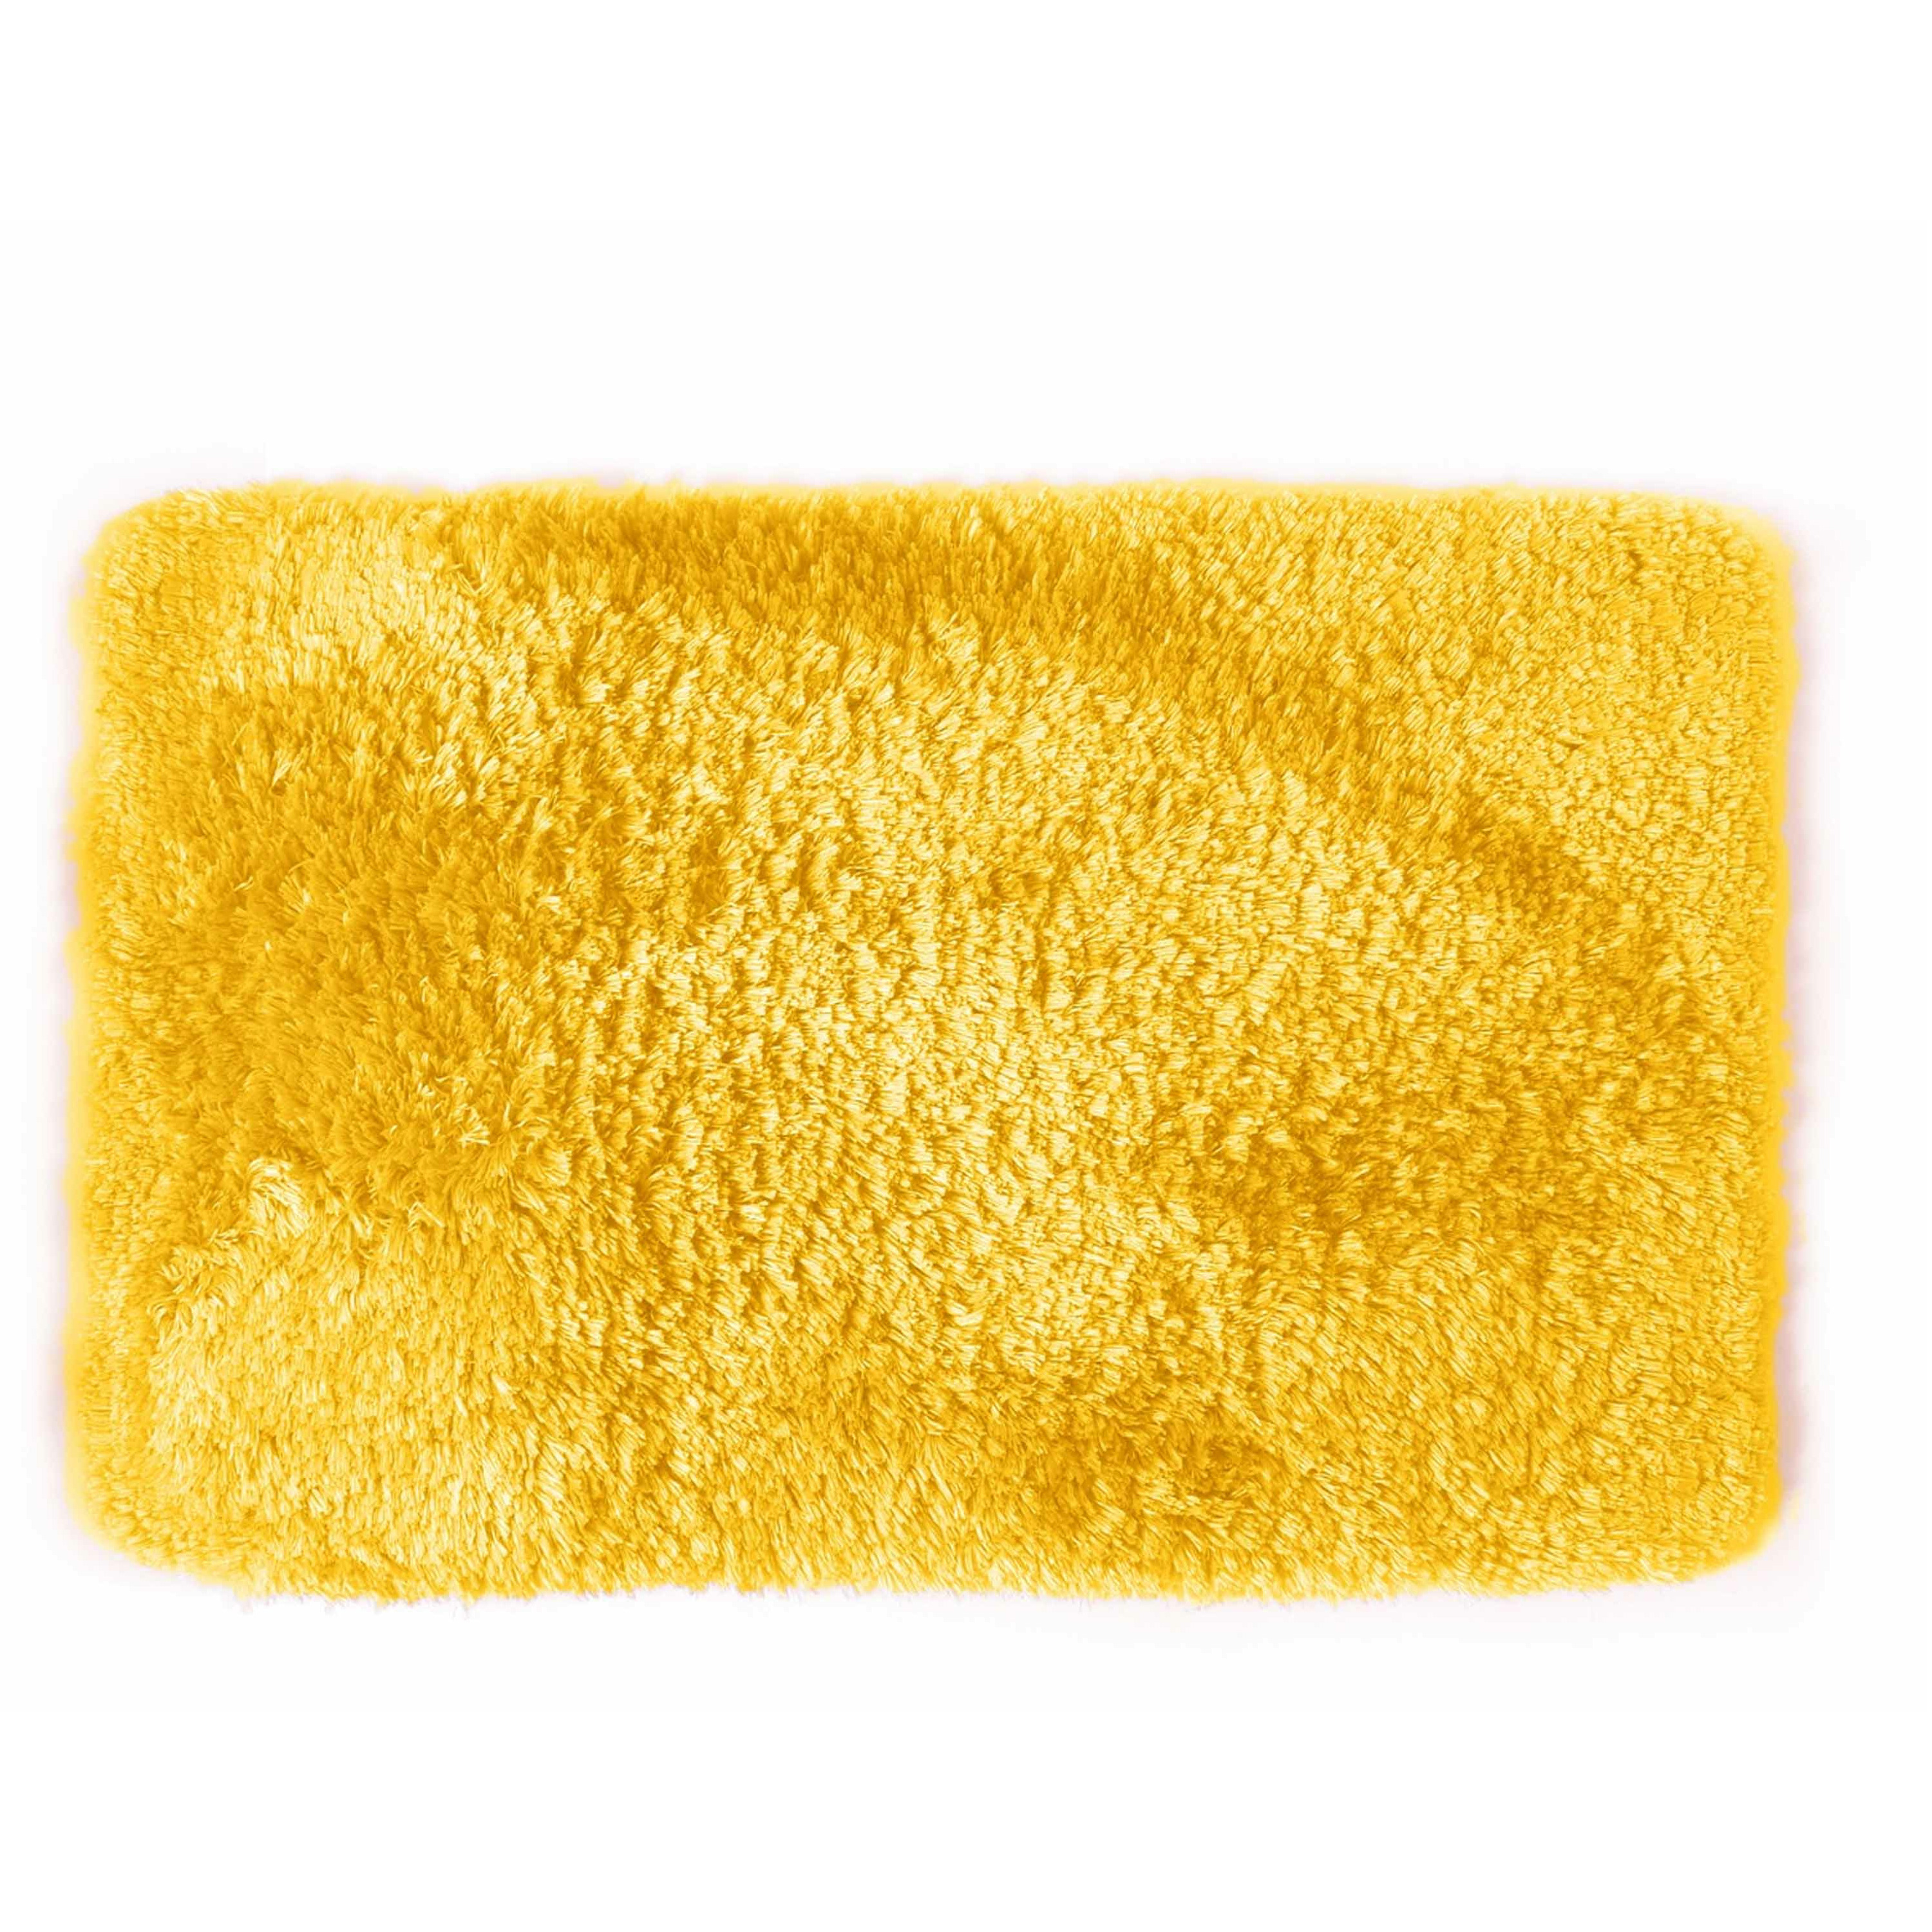 Spirella badkamer vloer kleedje-badmat tapijt hoogpolig en luxe uitvoering geel 40 x 60 cm Microfibe